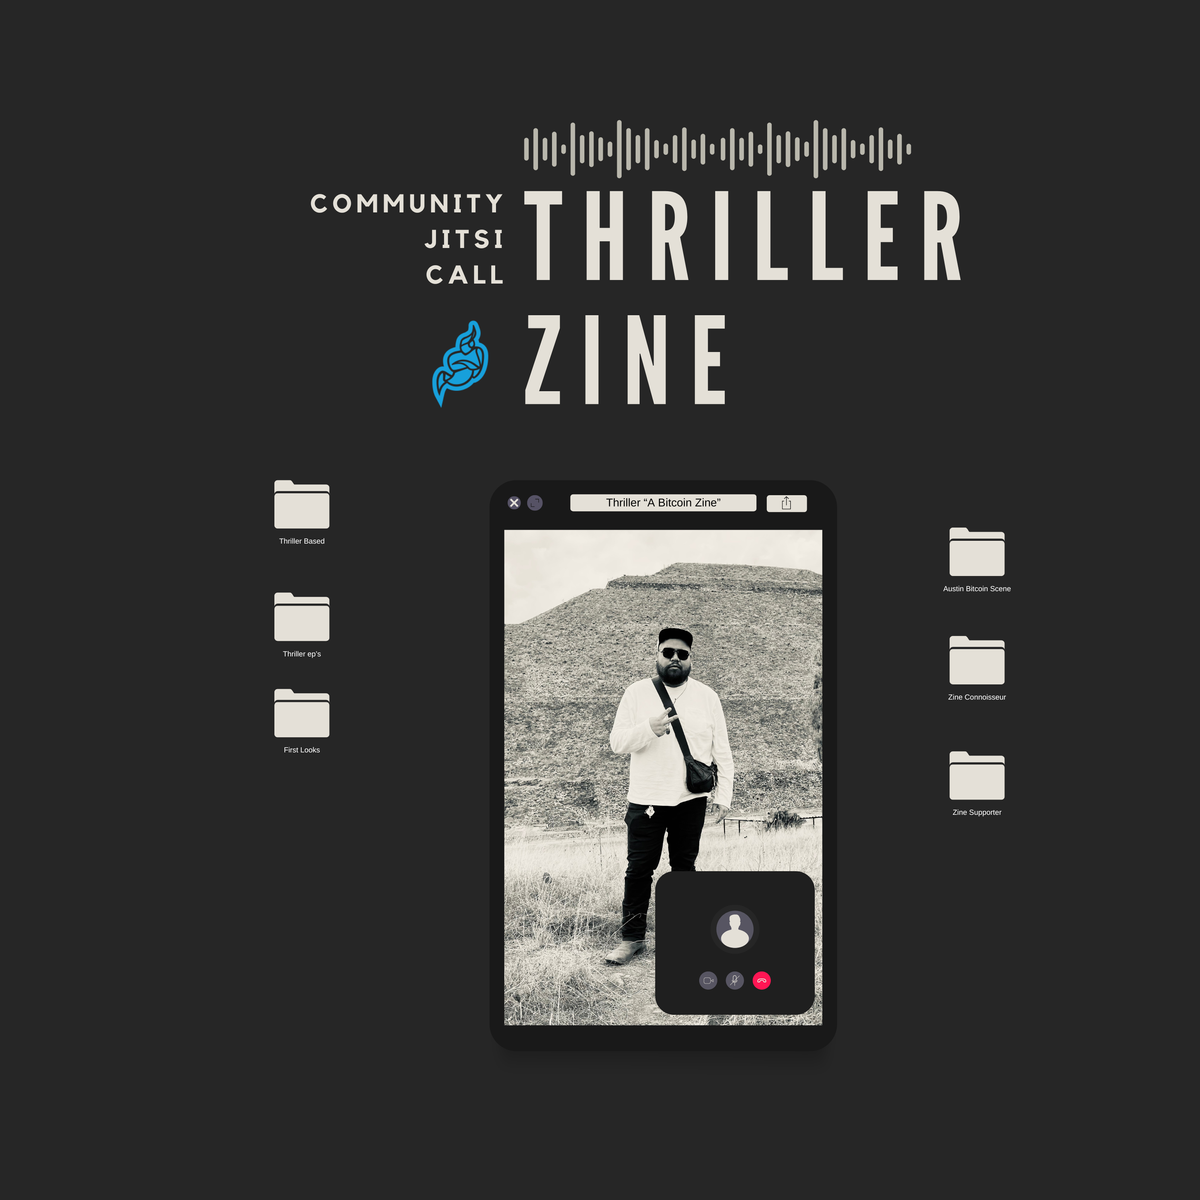 Thriller Zine Community Call